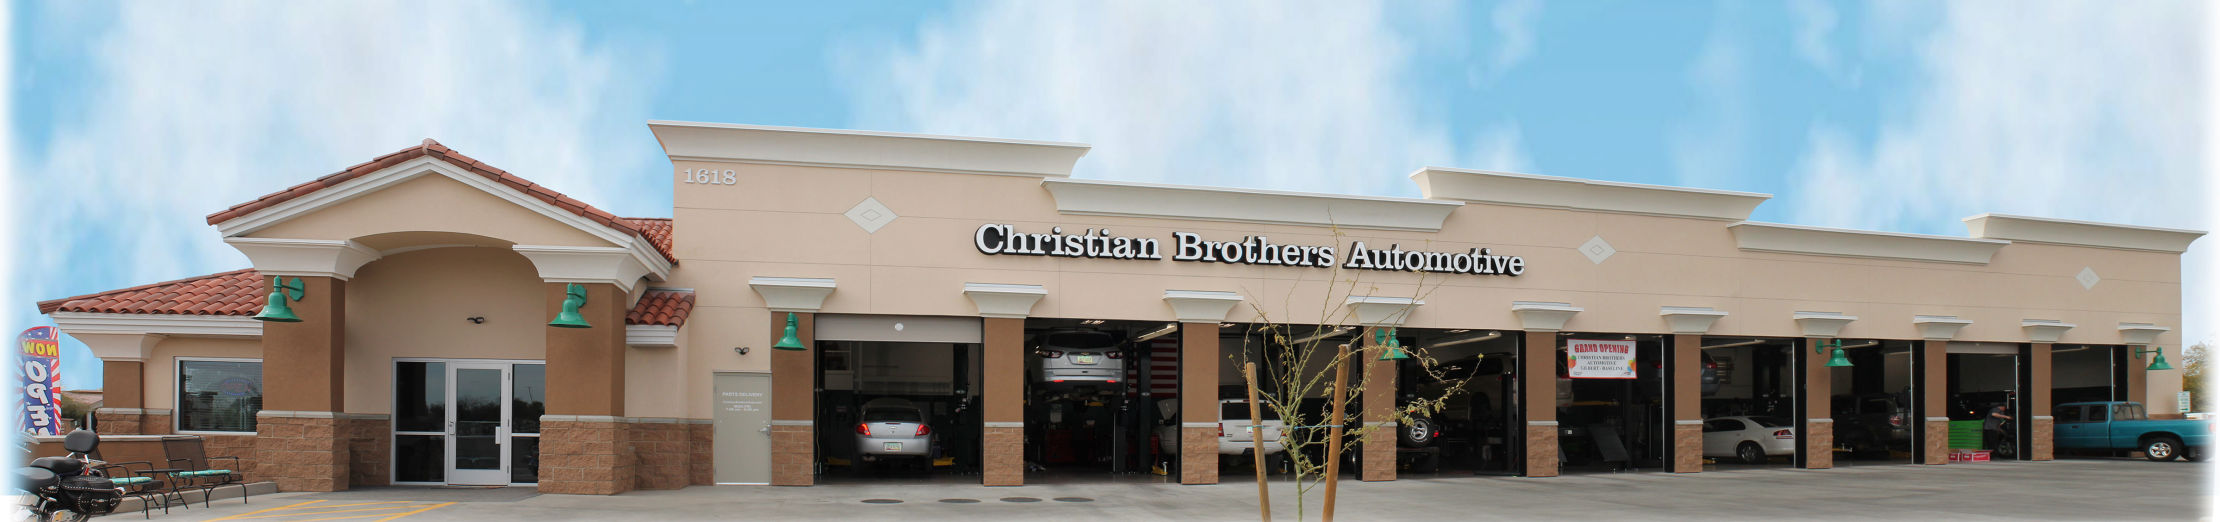 Christian Bros. Automotive, Peoria AZ